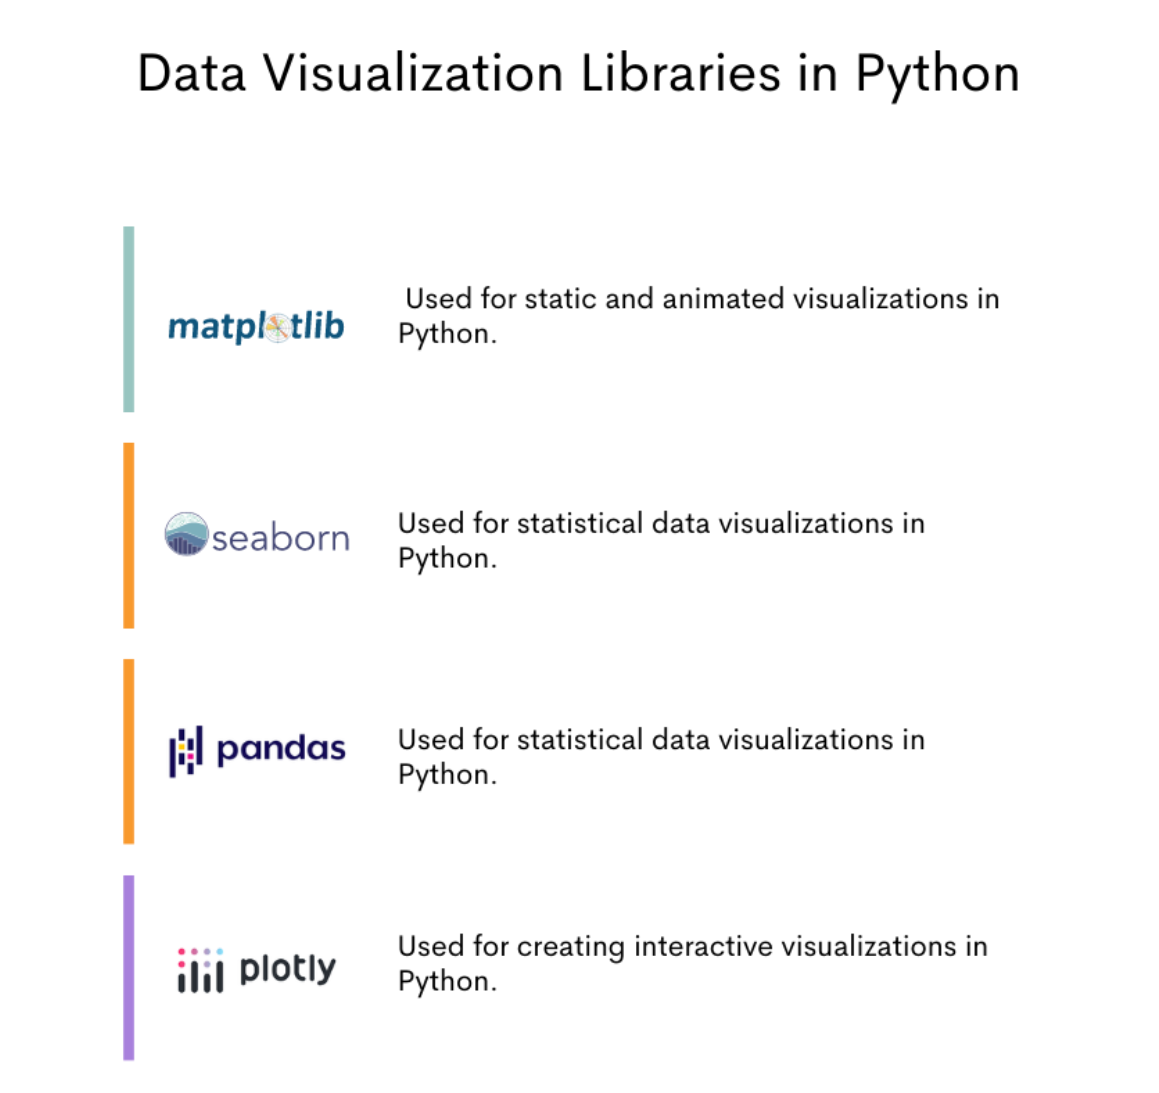 Data visualization libraries